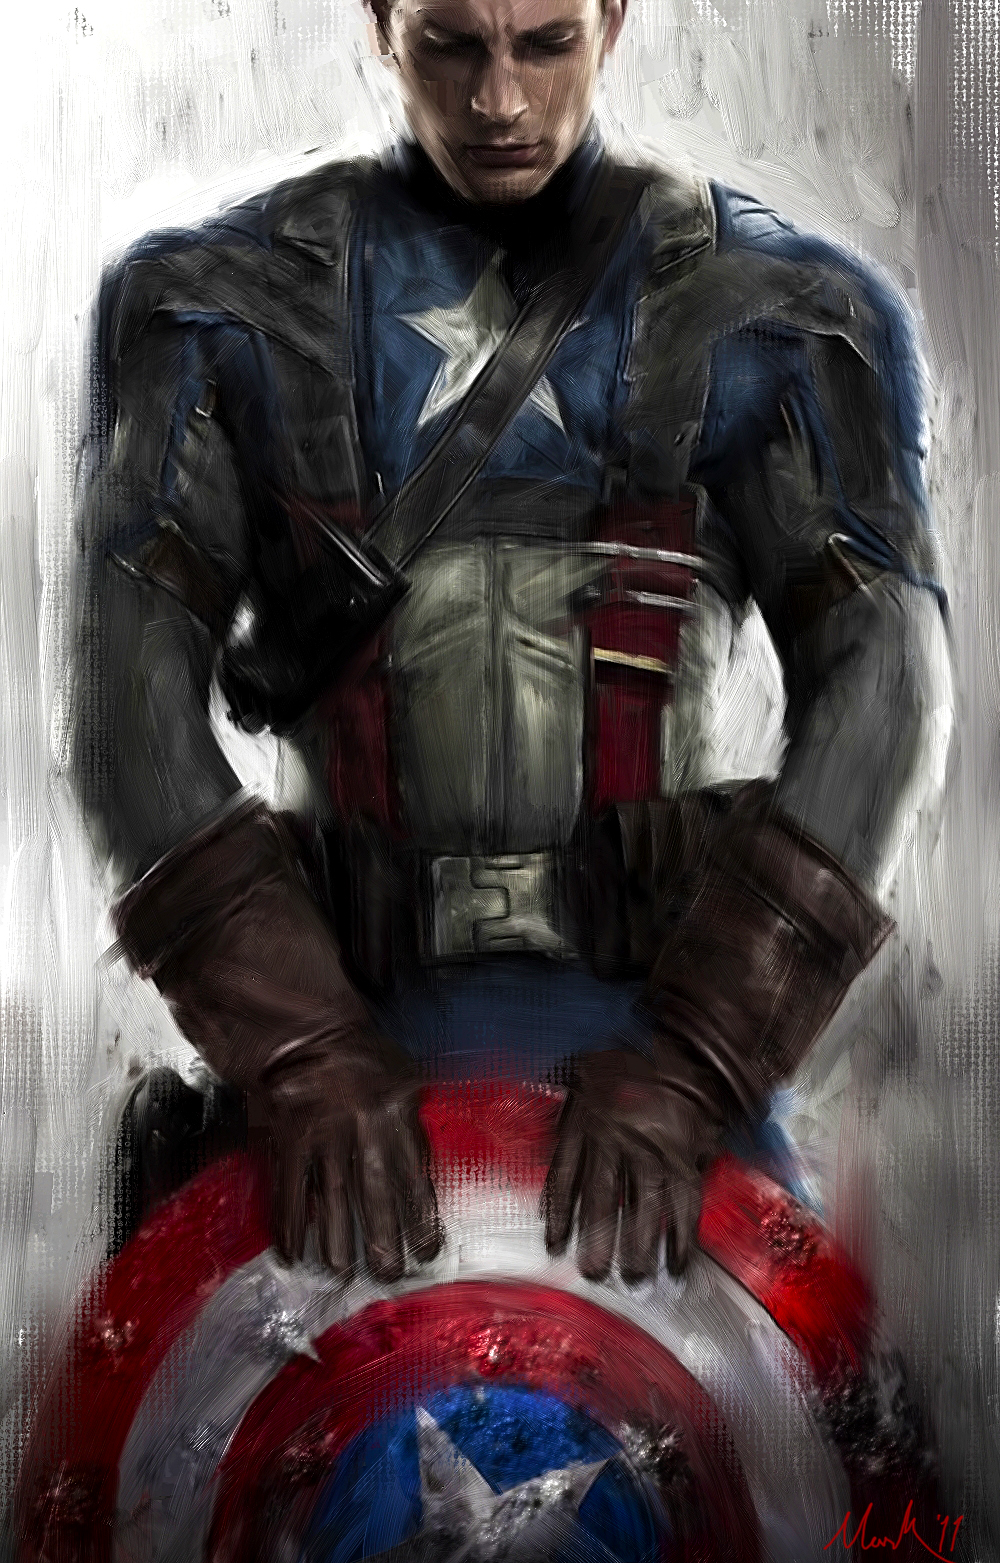 Dieta și formarea lui Chris Evans - Cinematograful Captain America